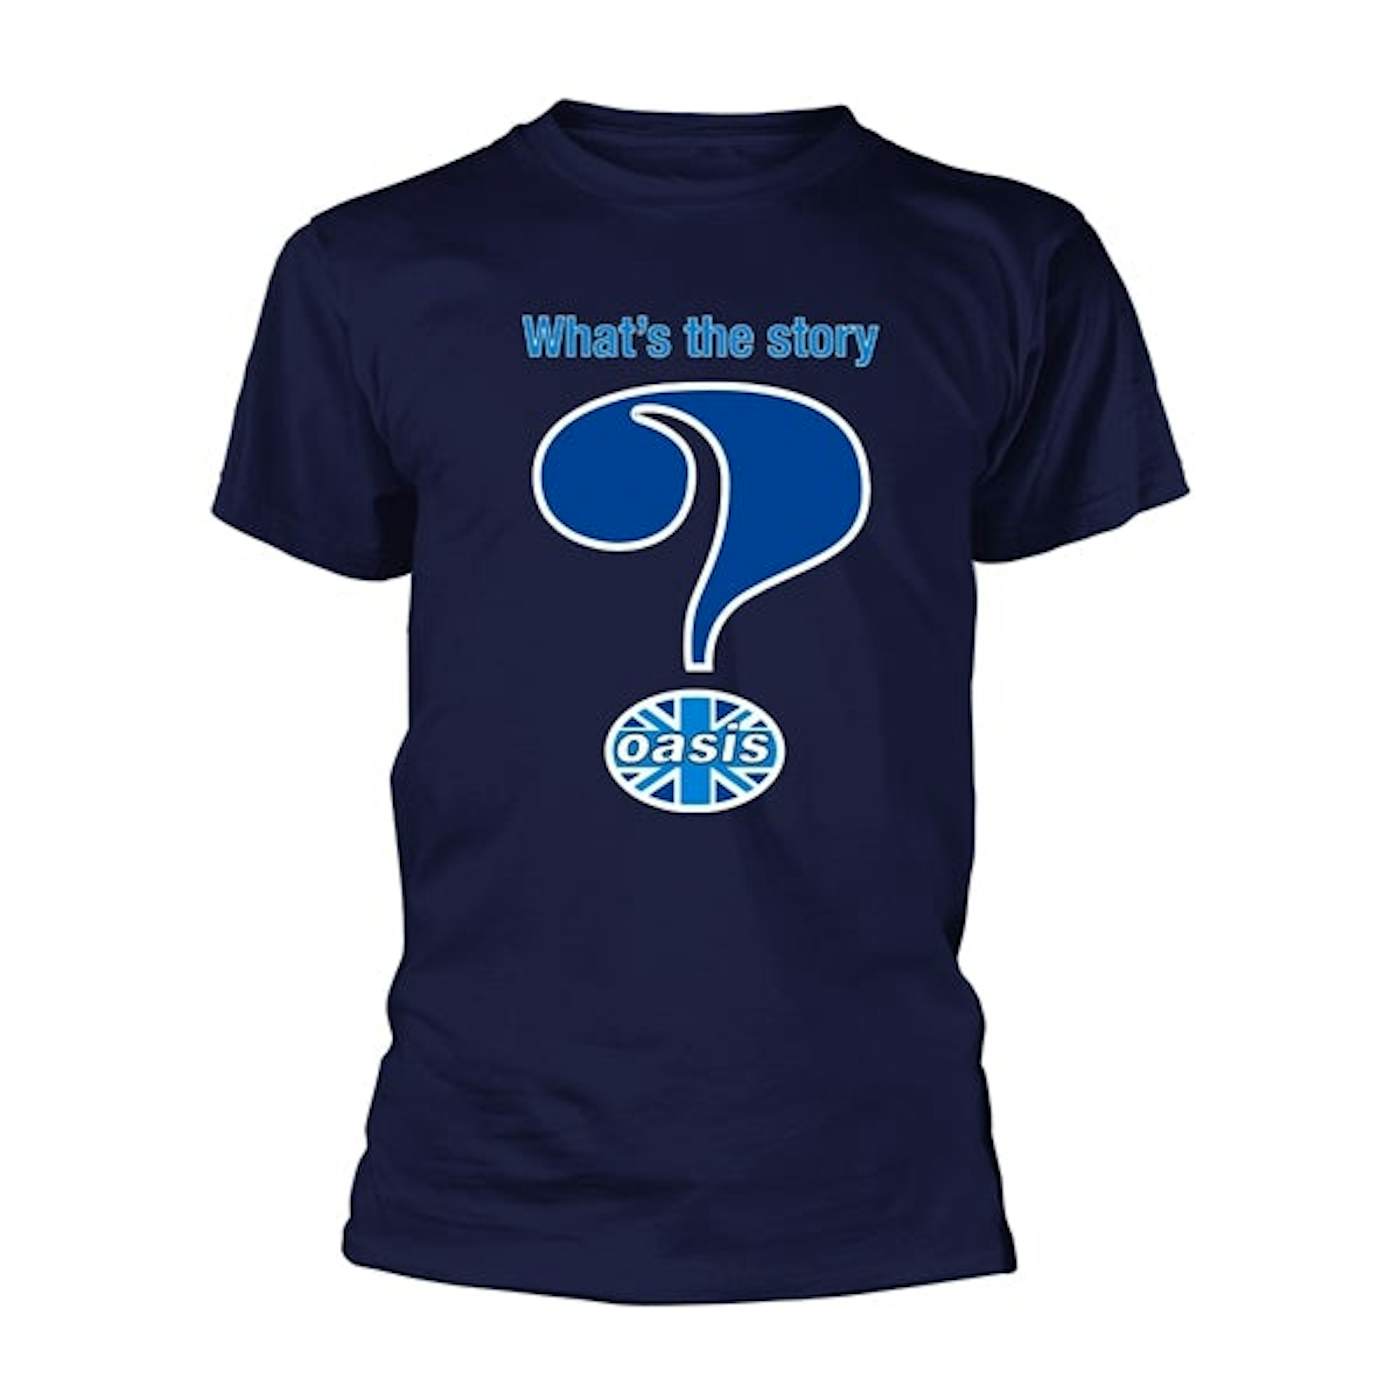 Oasis T Shirt - Question Mark (Navy)